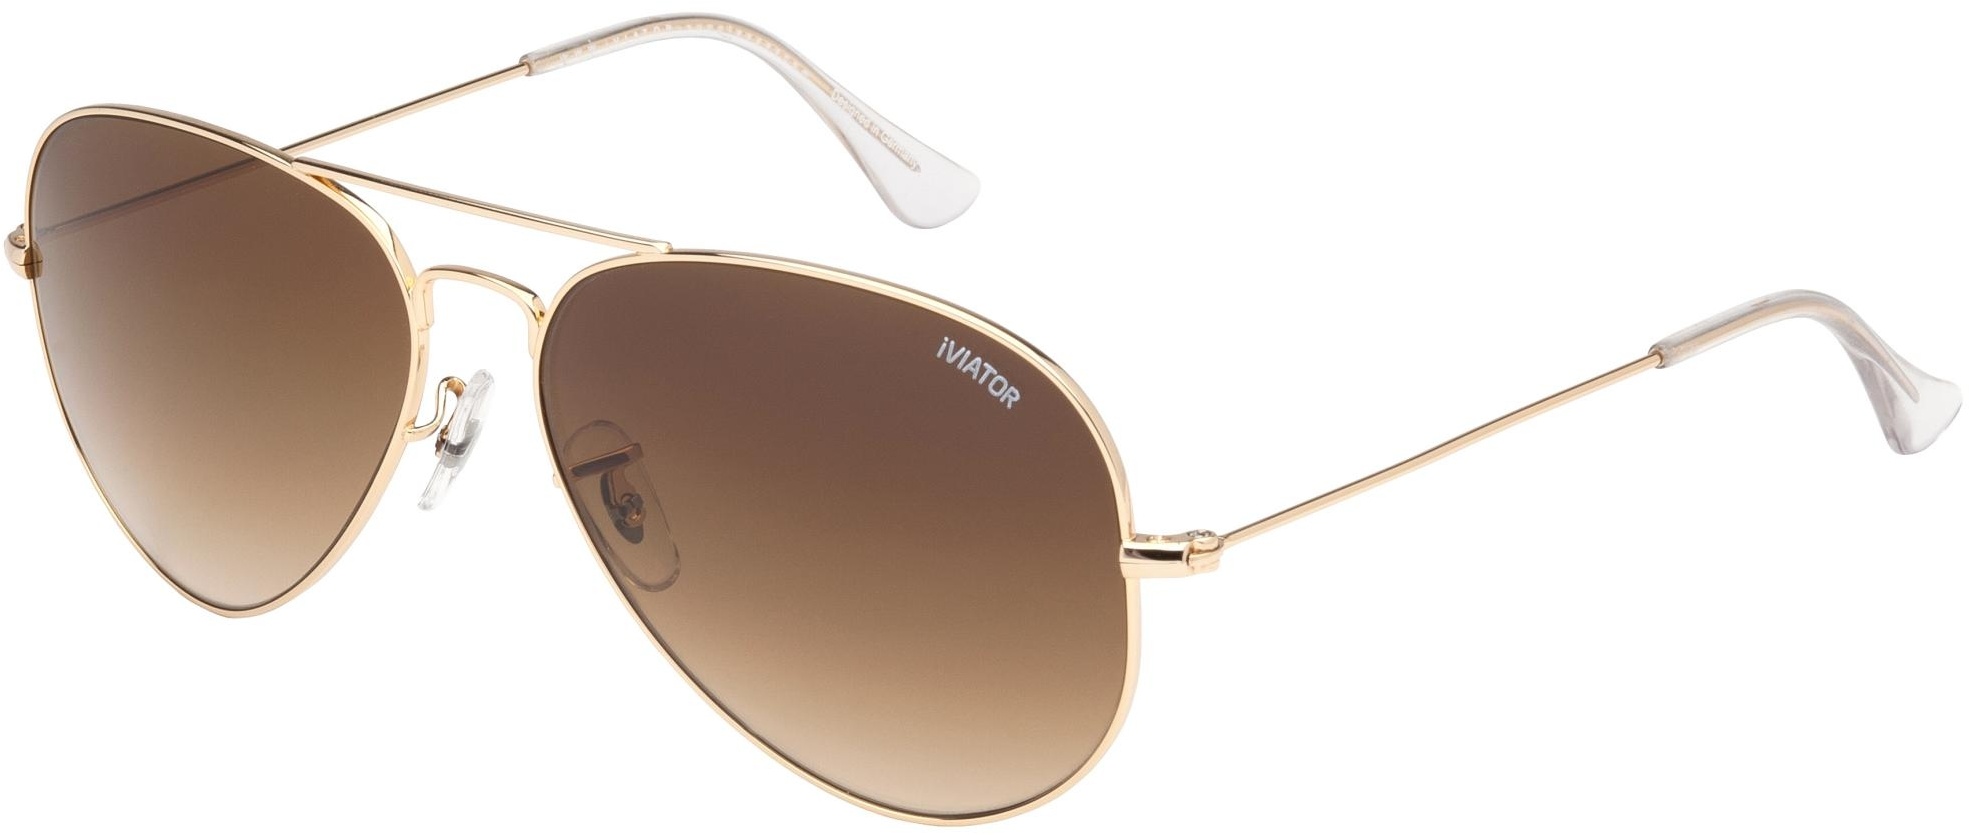 iVIATOR Sunglasses-Gold-114 Gradient Brown - Unisex